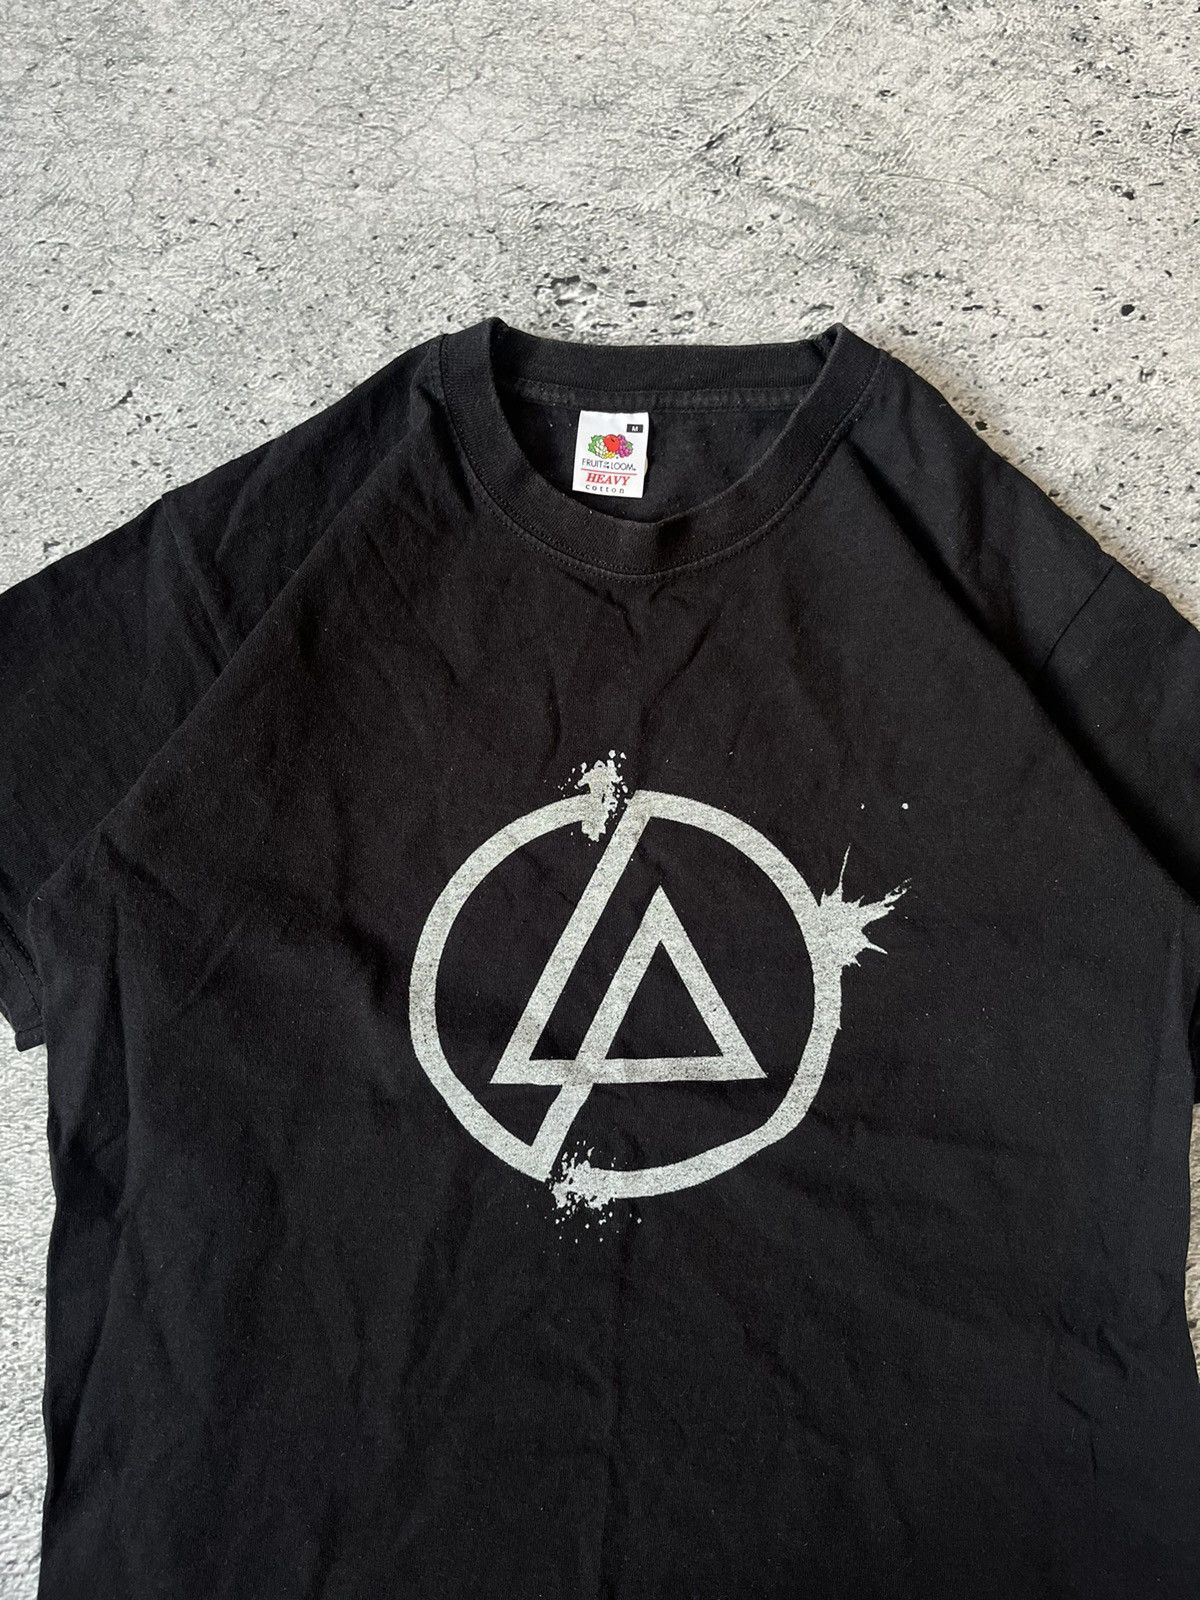 Vintage Vintage 2000 Linkin Park Promo Band T-Shirt Size US M / EU 48-50 / 2 - 4 Thumbnail